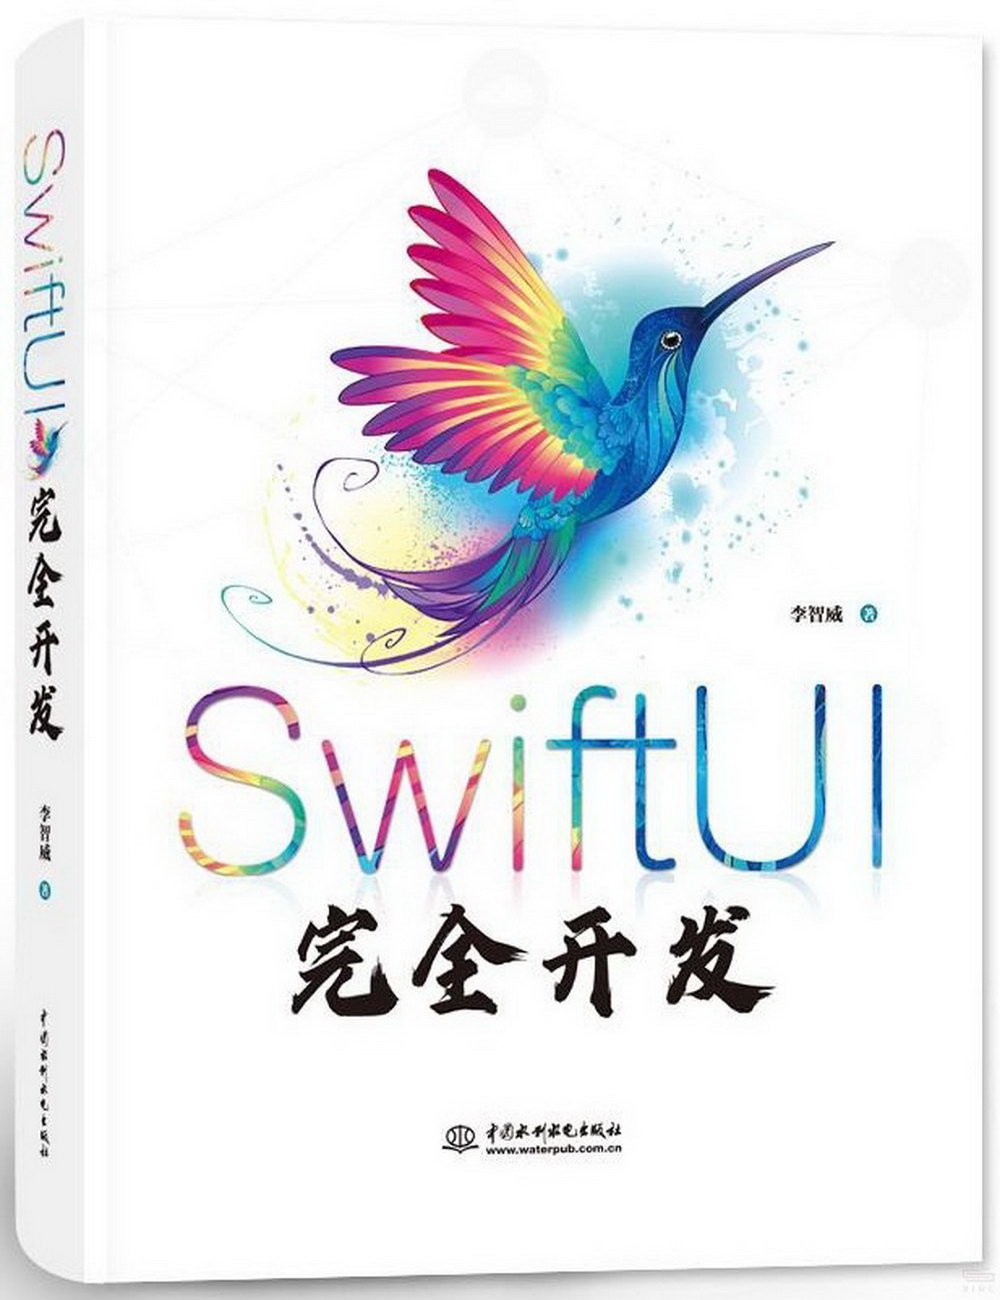 SwiftUI完全開發